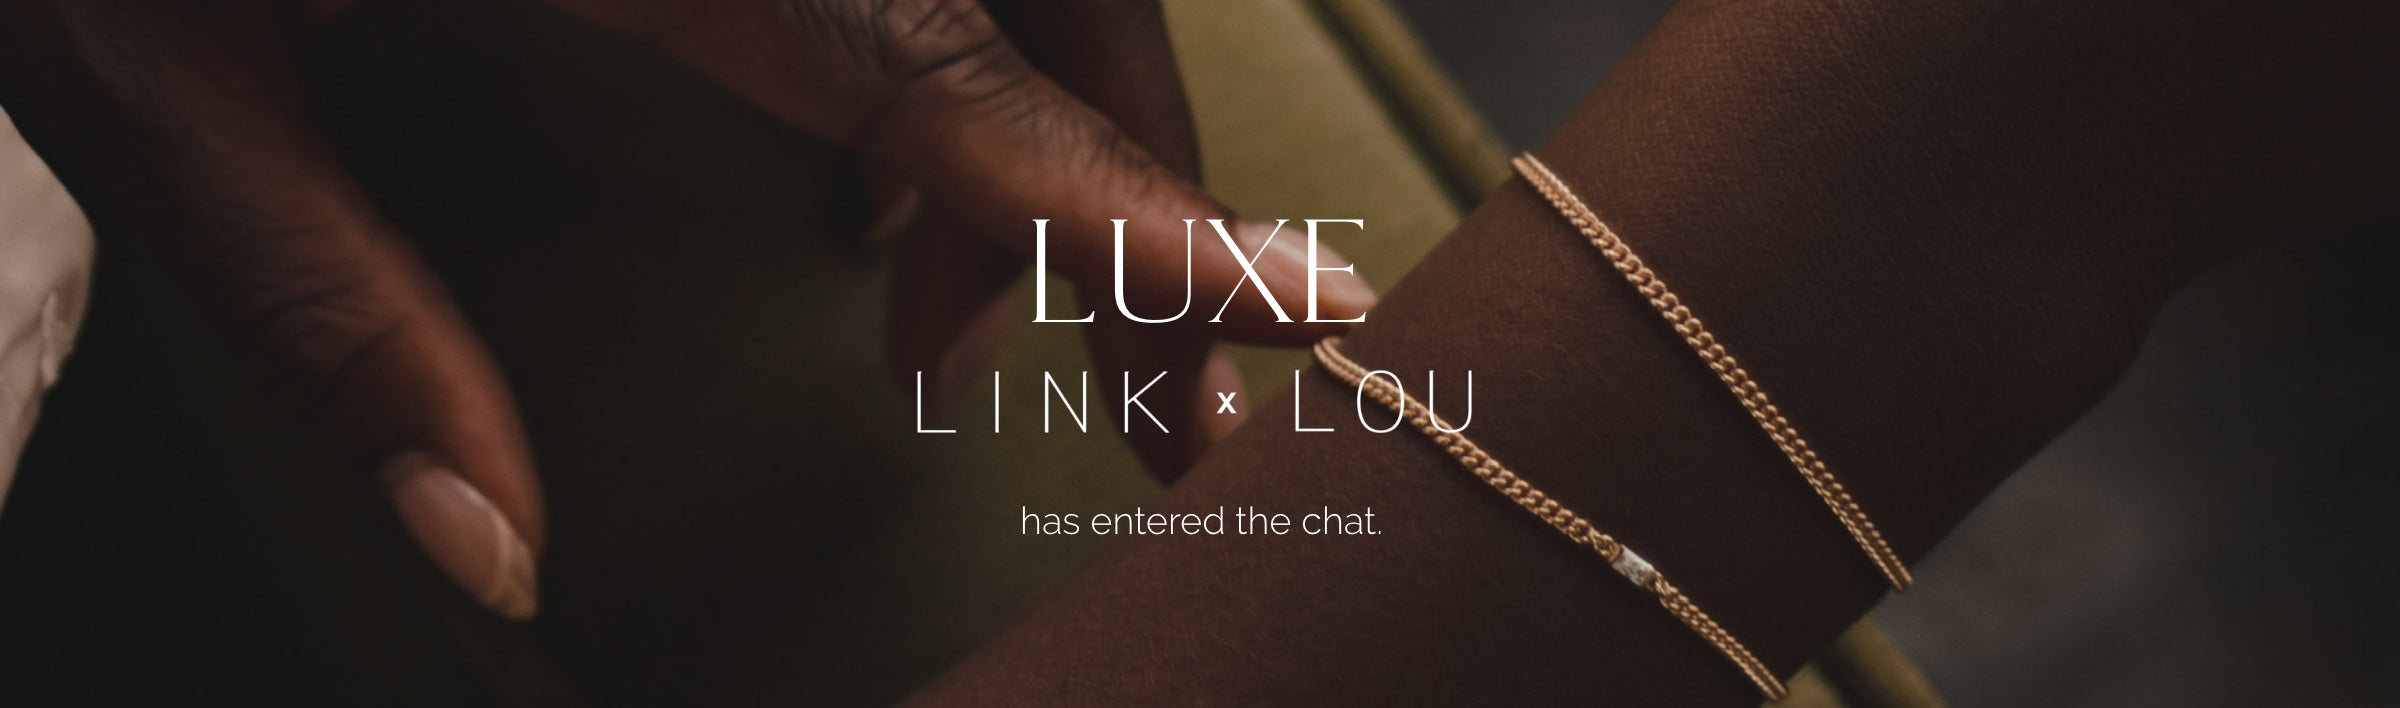 luxe-link-x-lou-banner.jpg